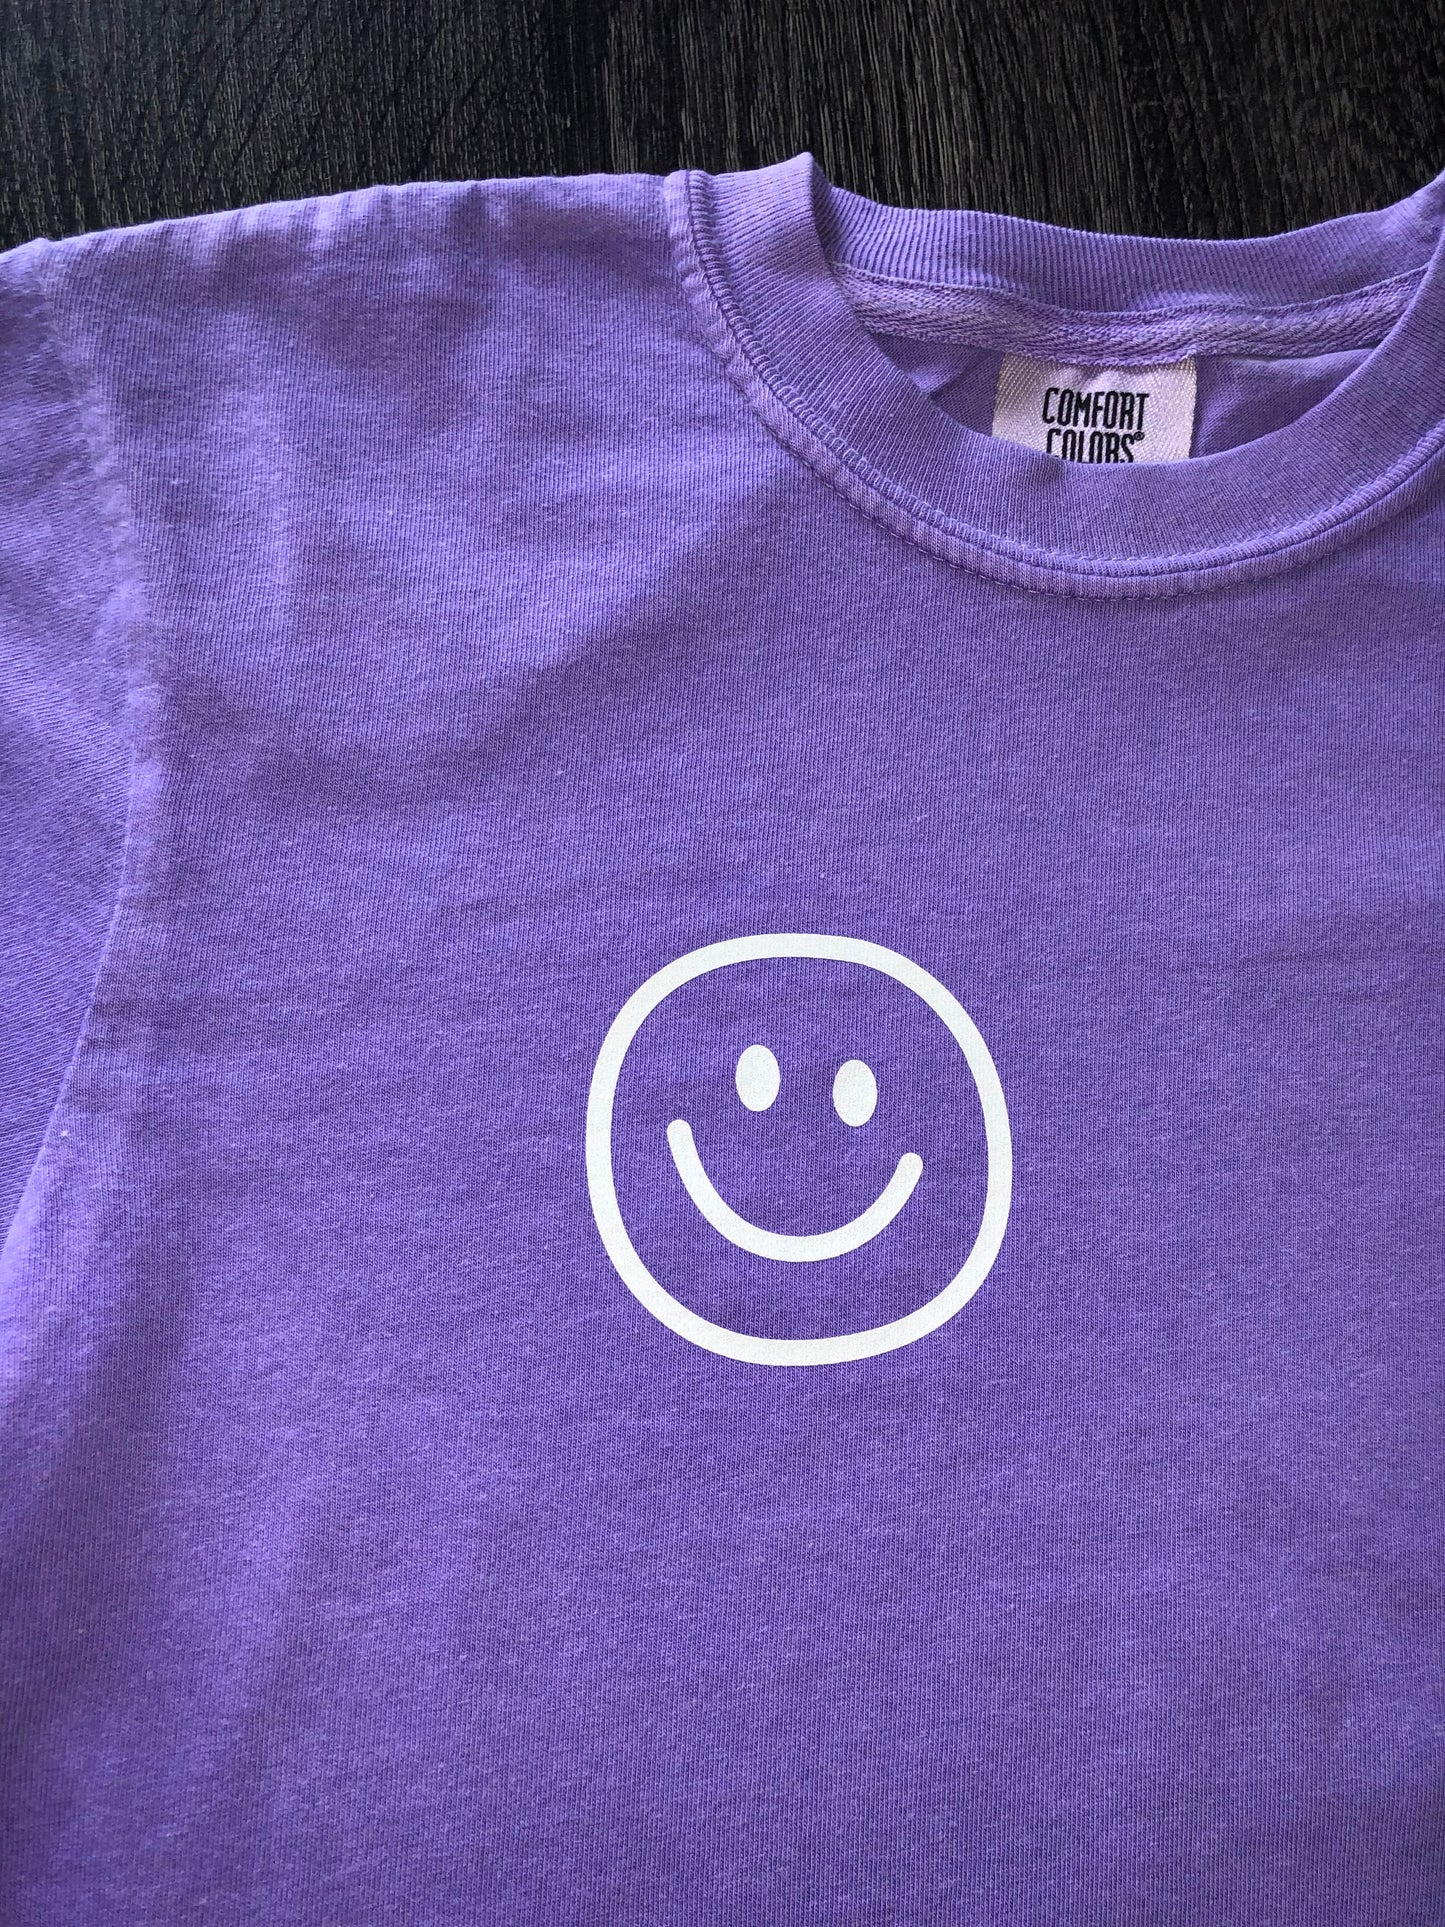 Purple Smiley Face Long Sleeve